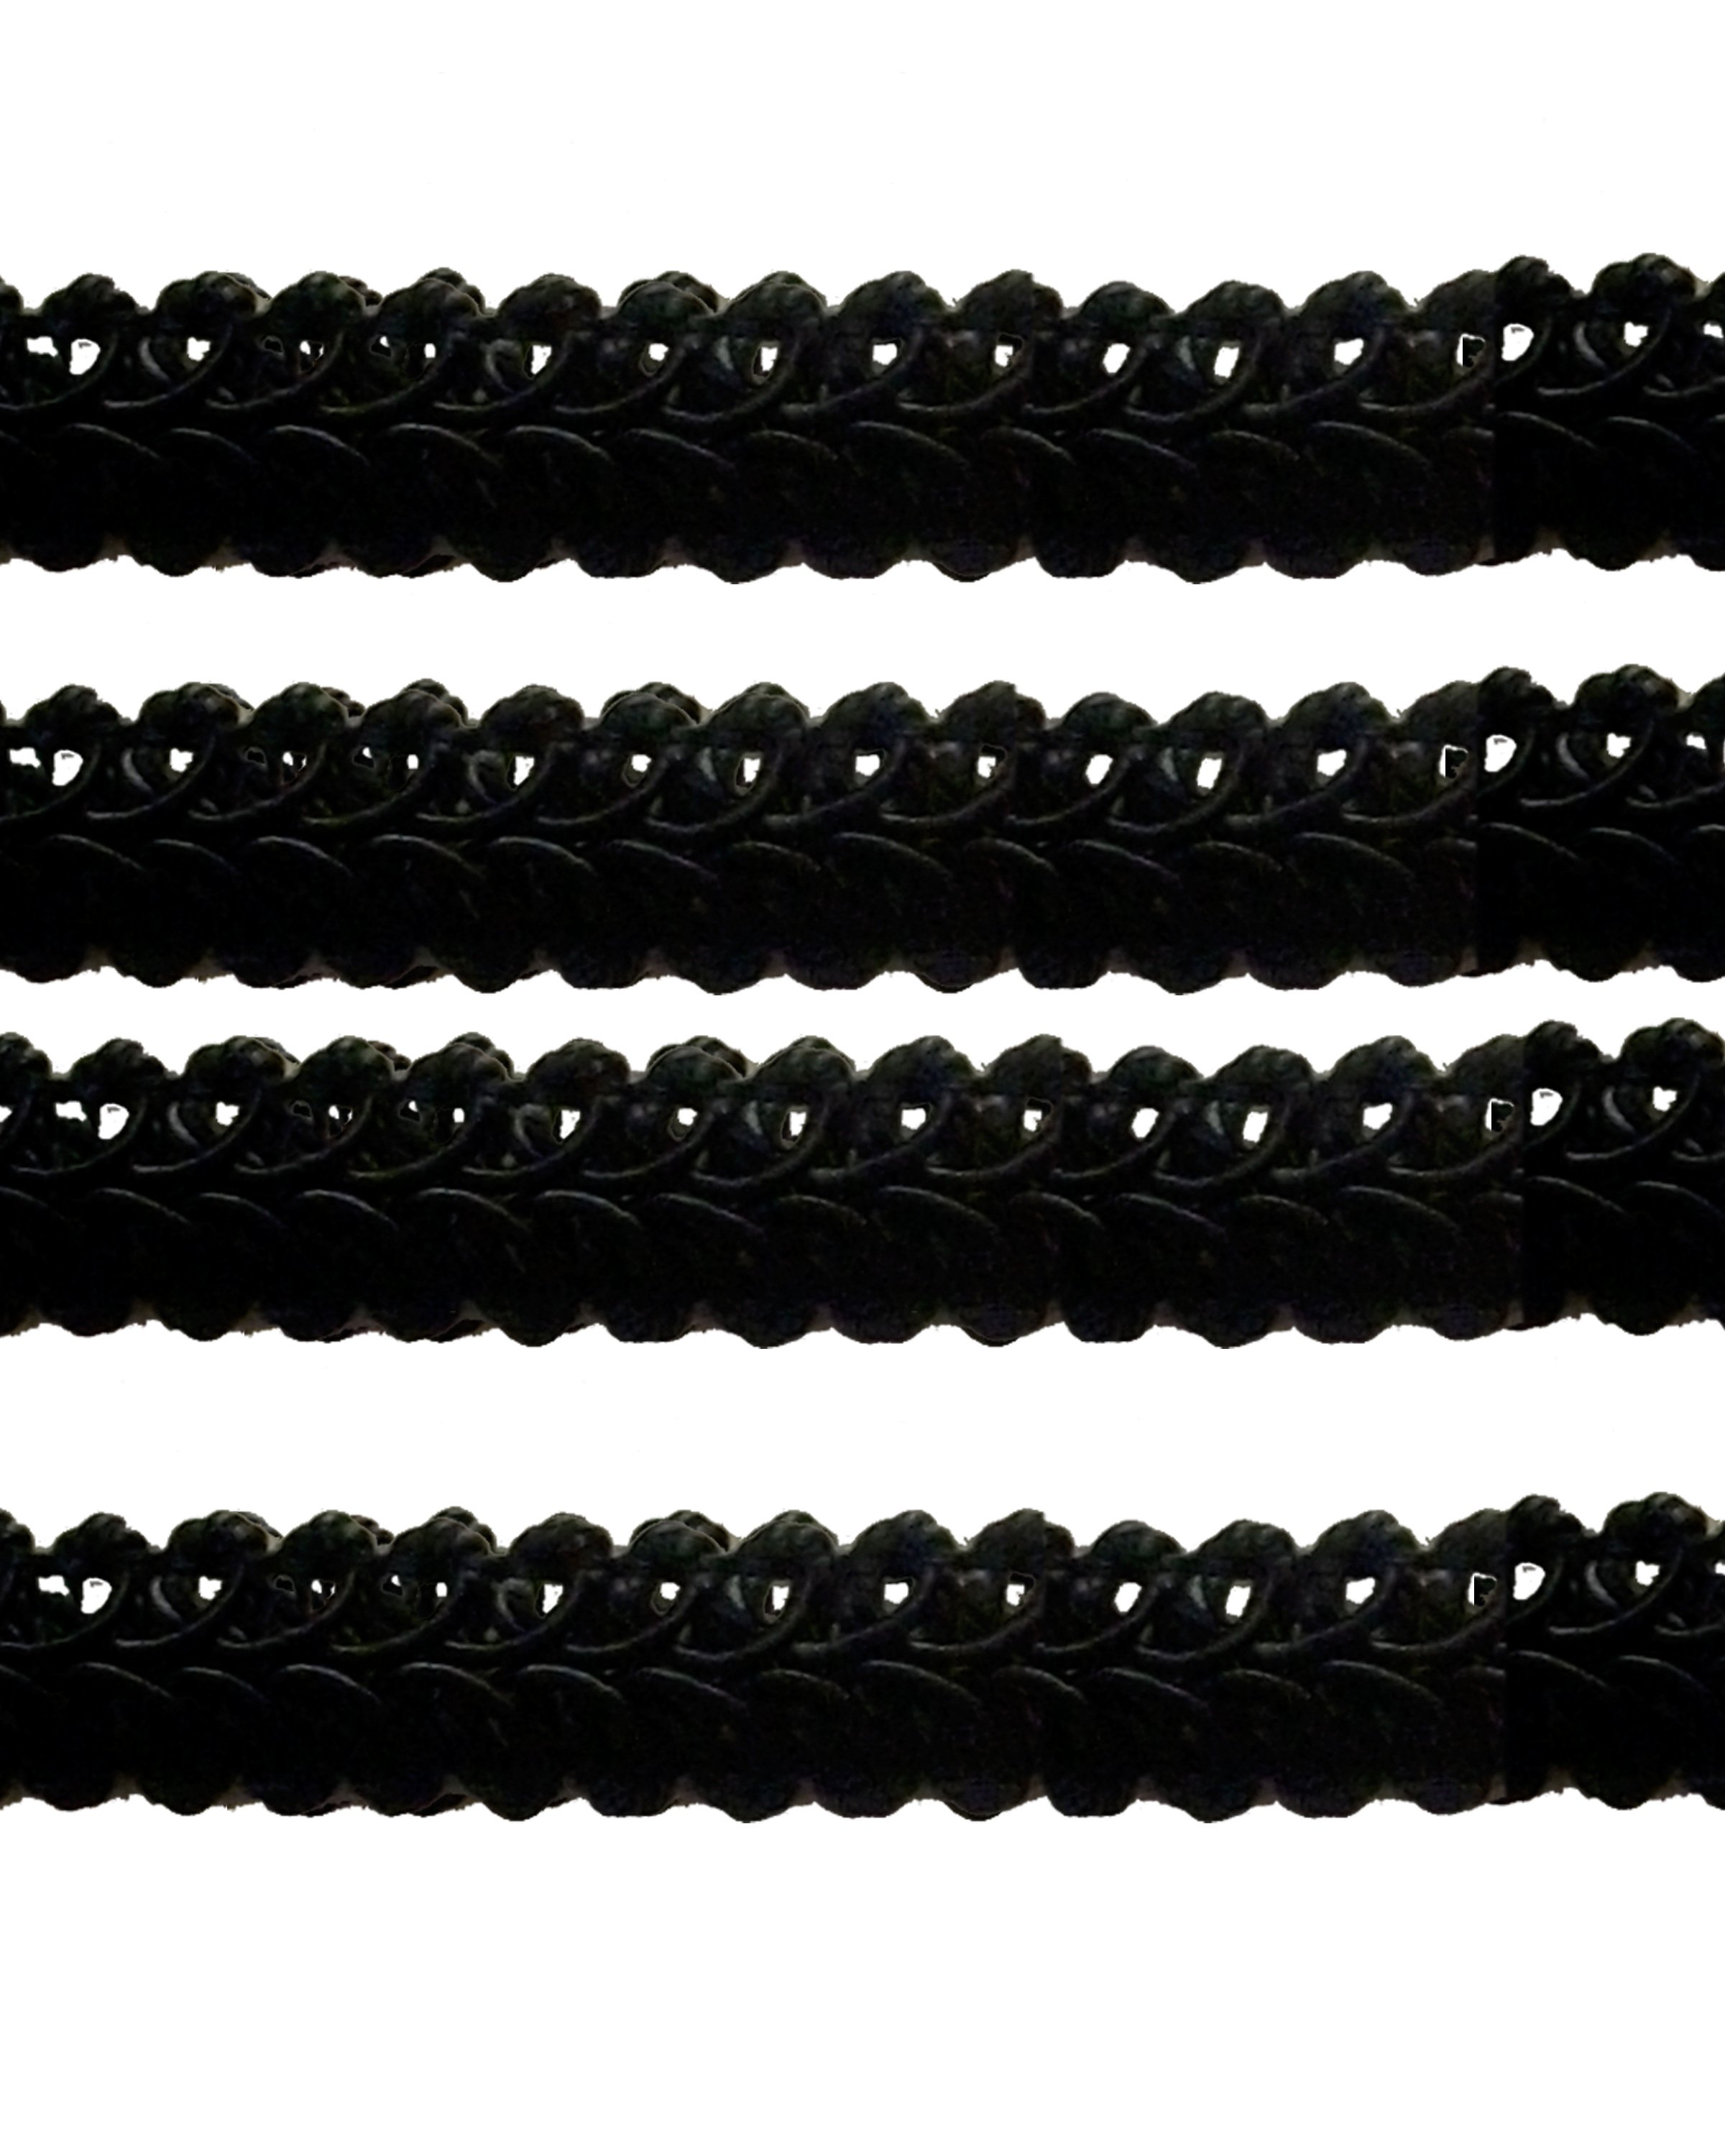 Small Herringbone Braid - Black 12mm Price is for 5 metres